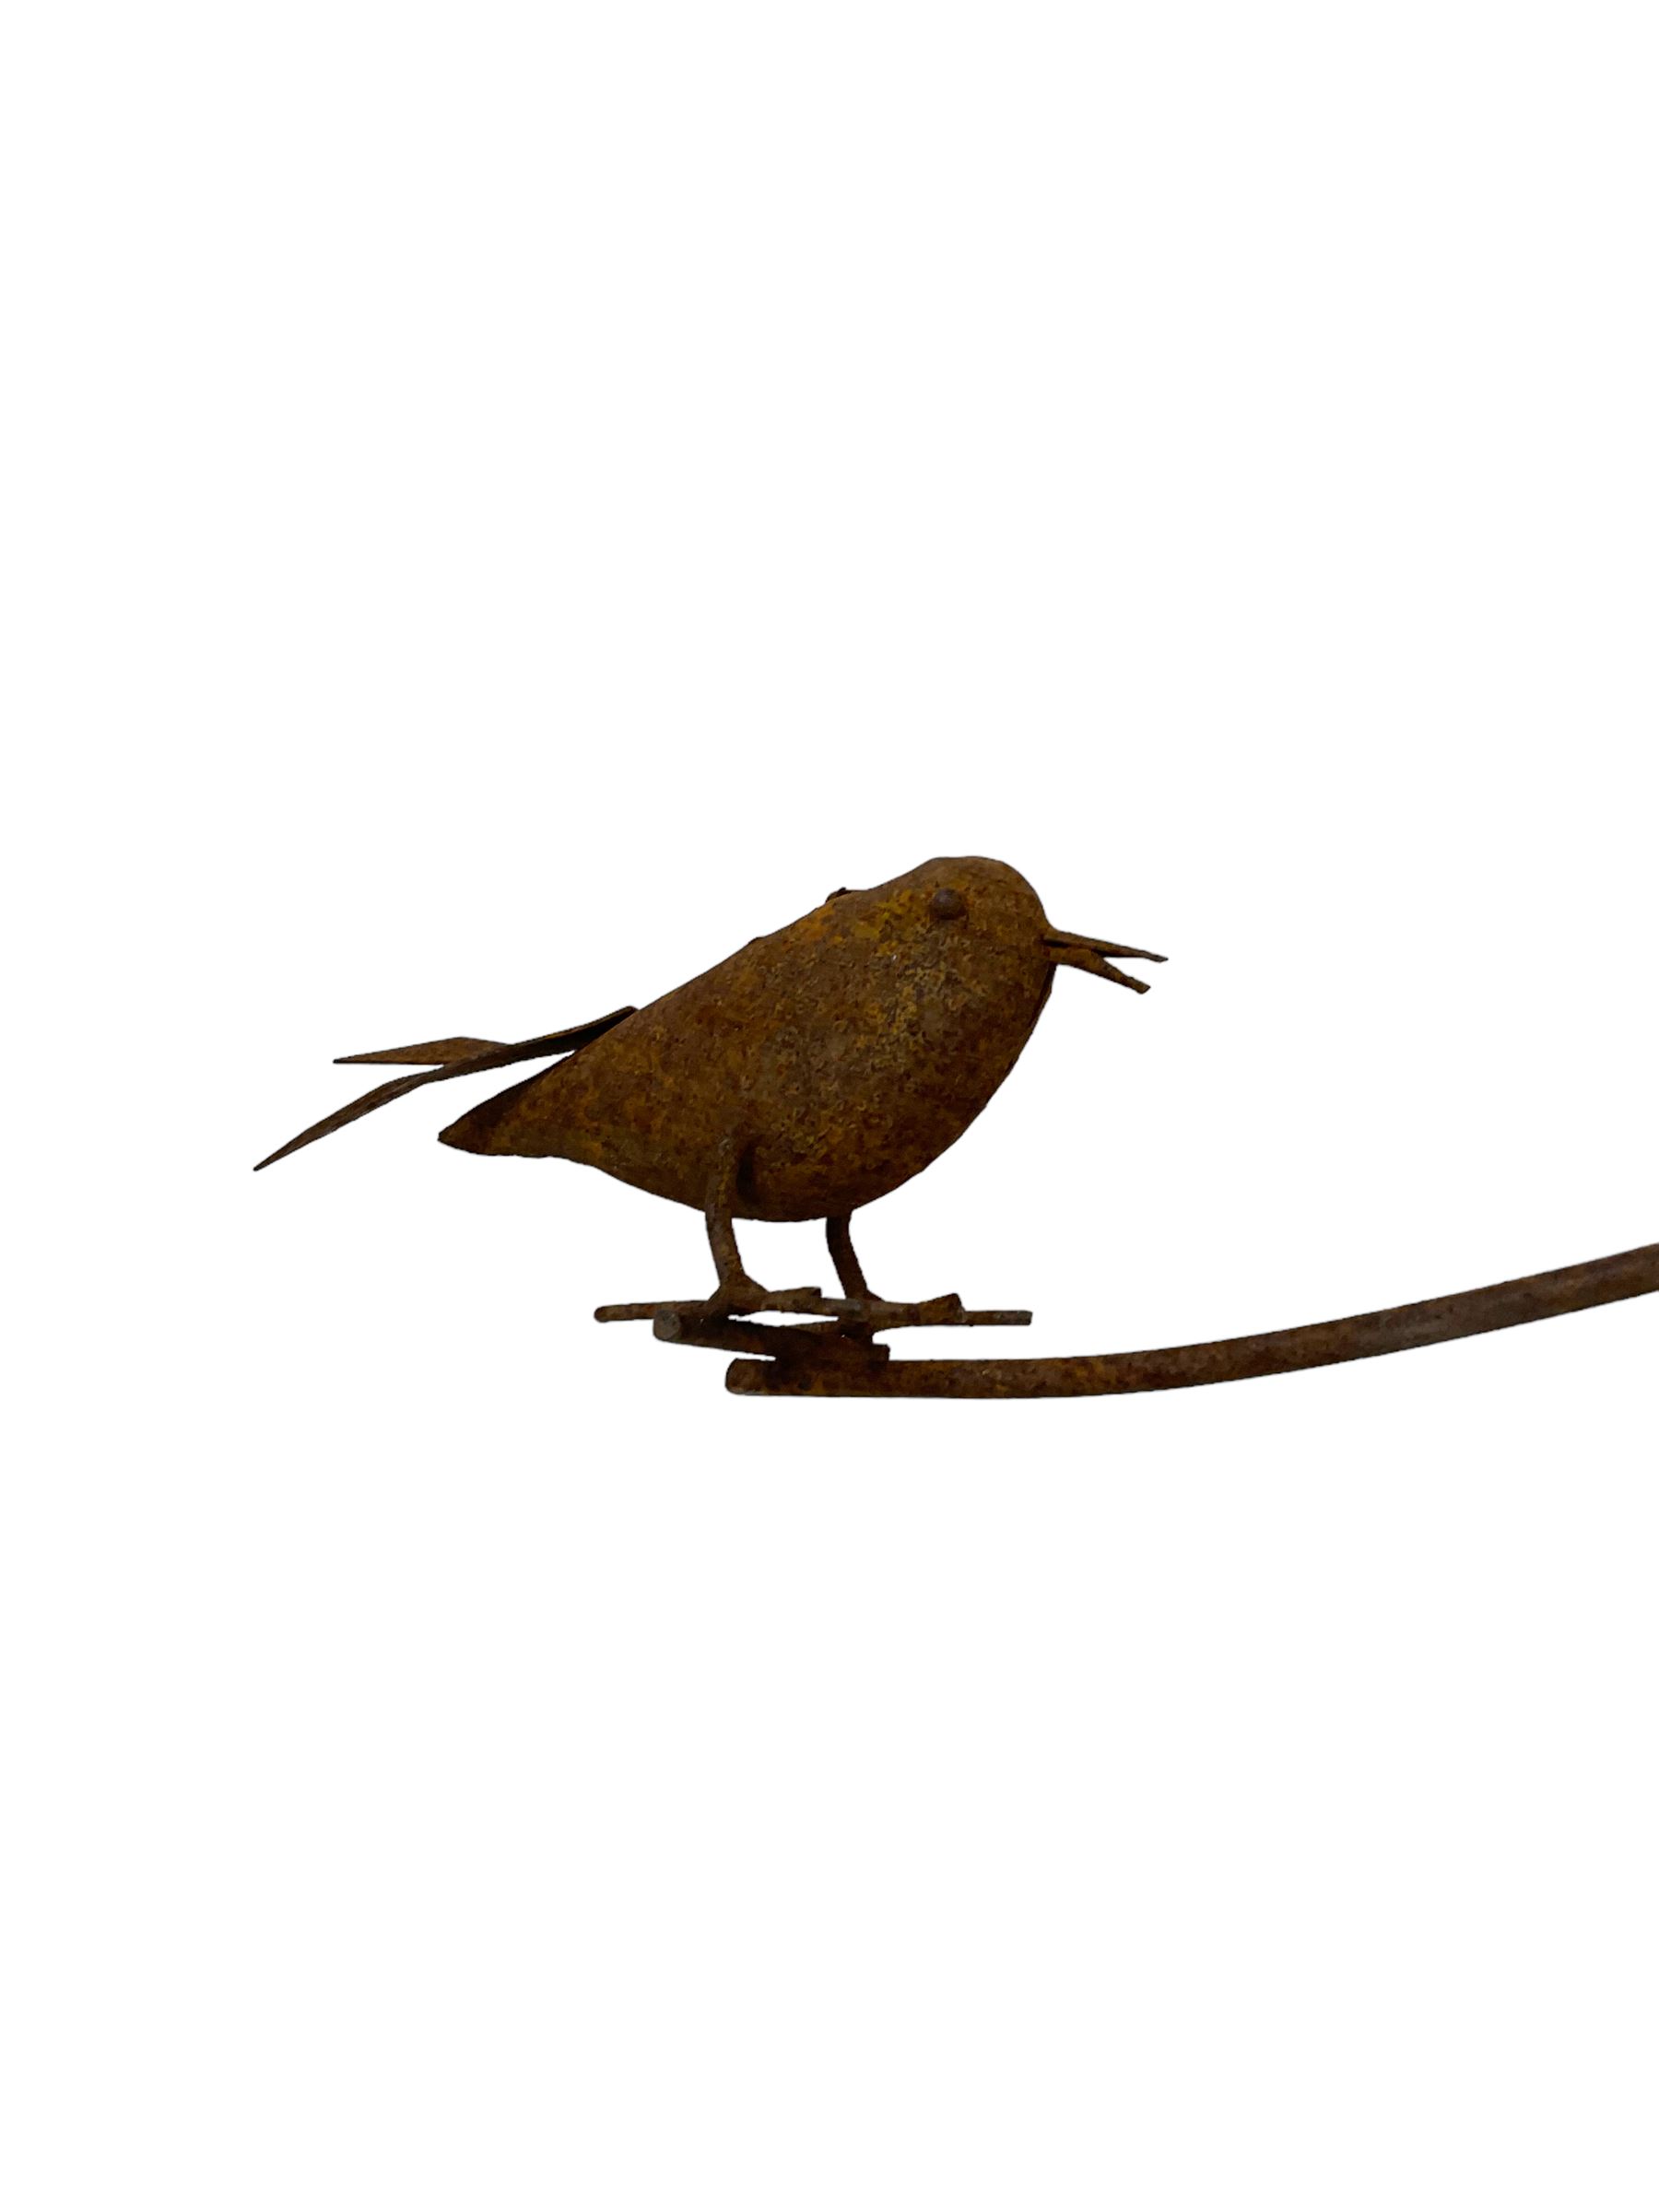 Wrought metal counter balancing bird garden ornament - Image 3 of 4